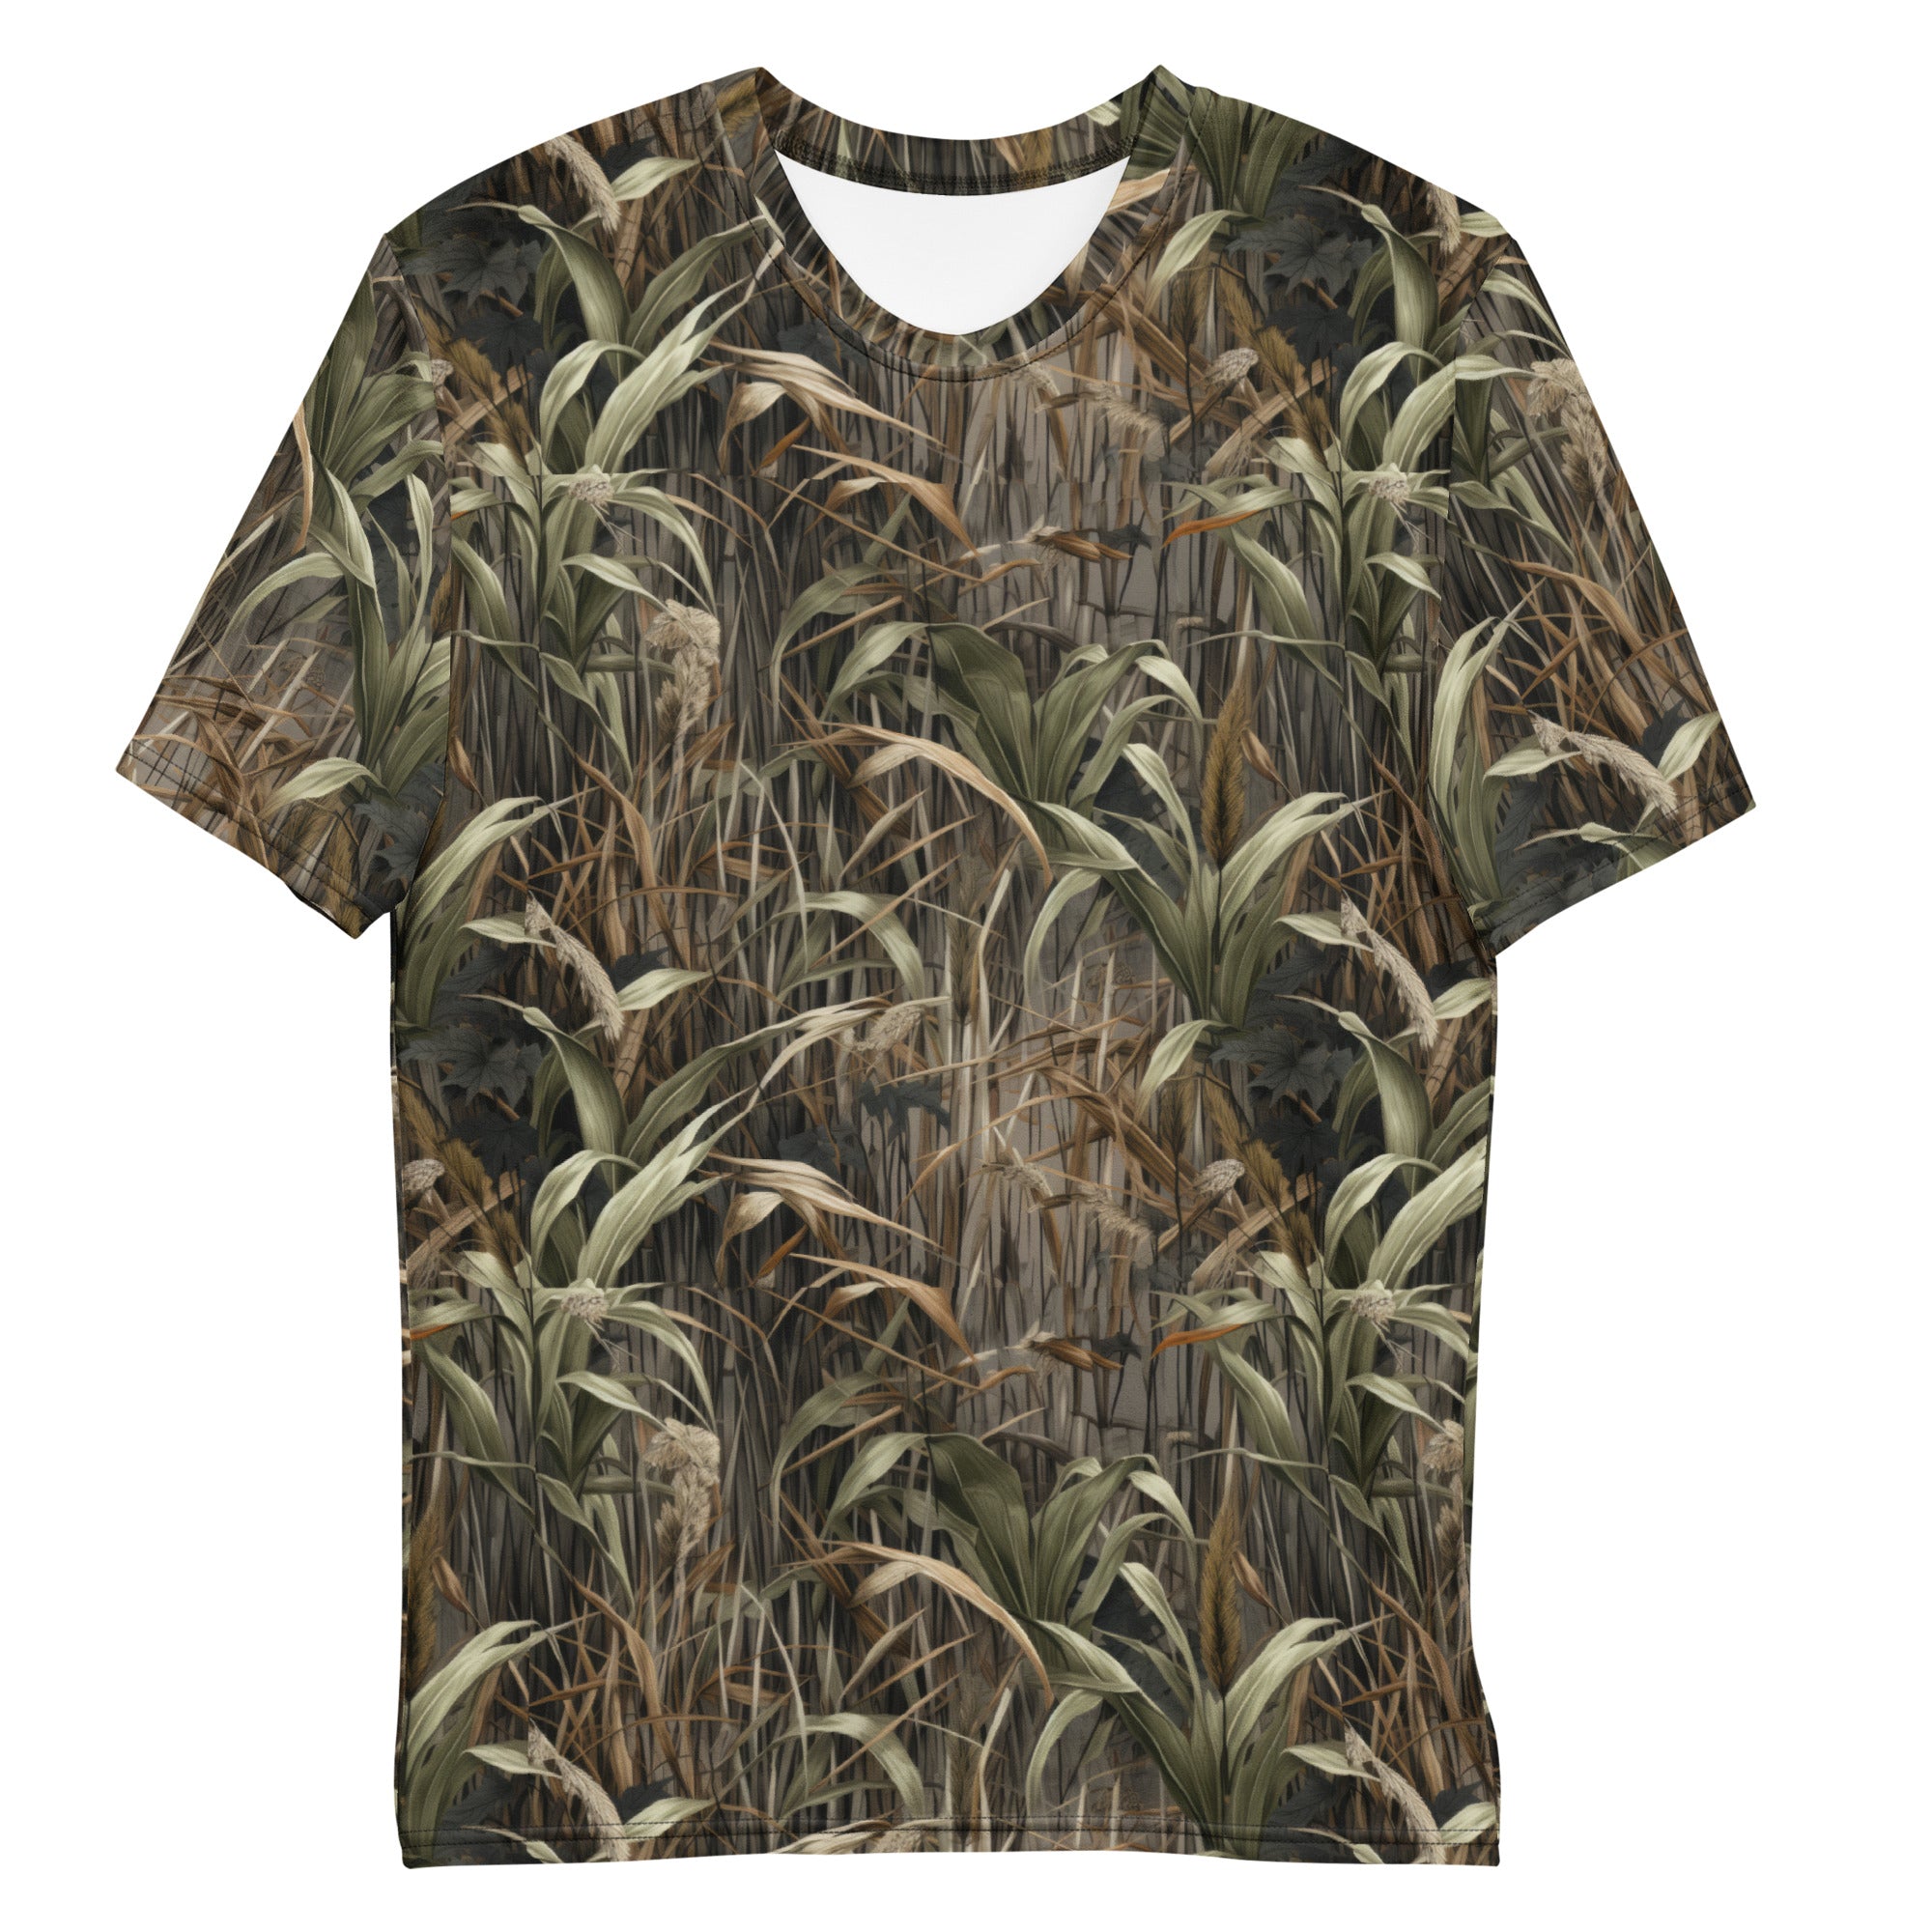 StealthBlend Marsh Camouflage Men's T-Shirt